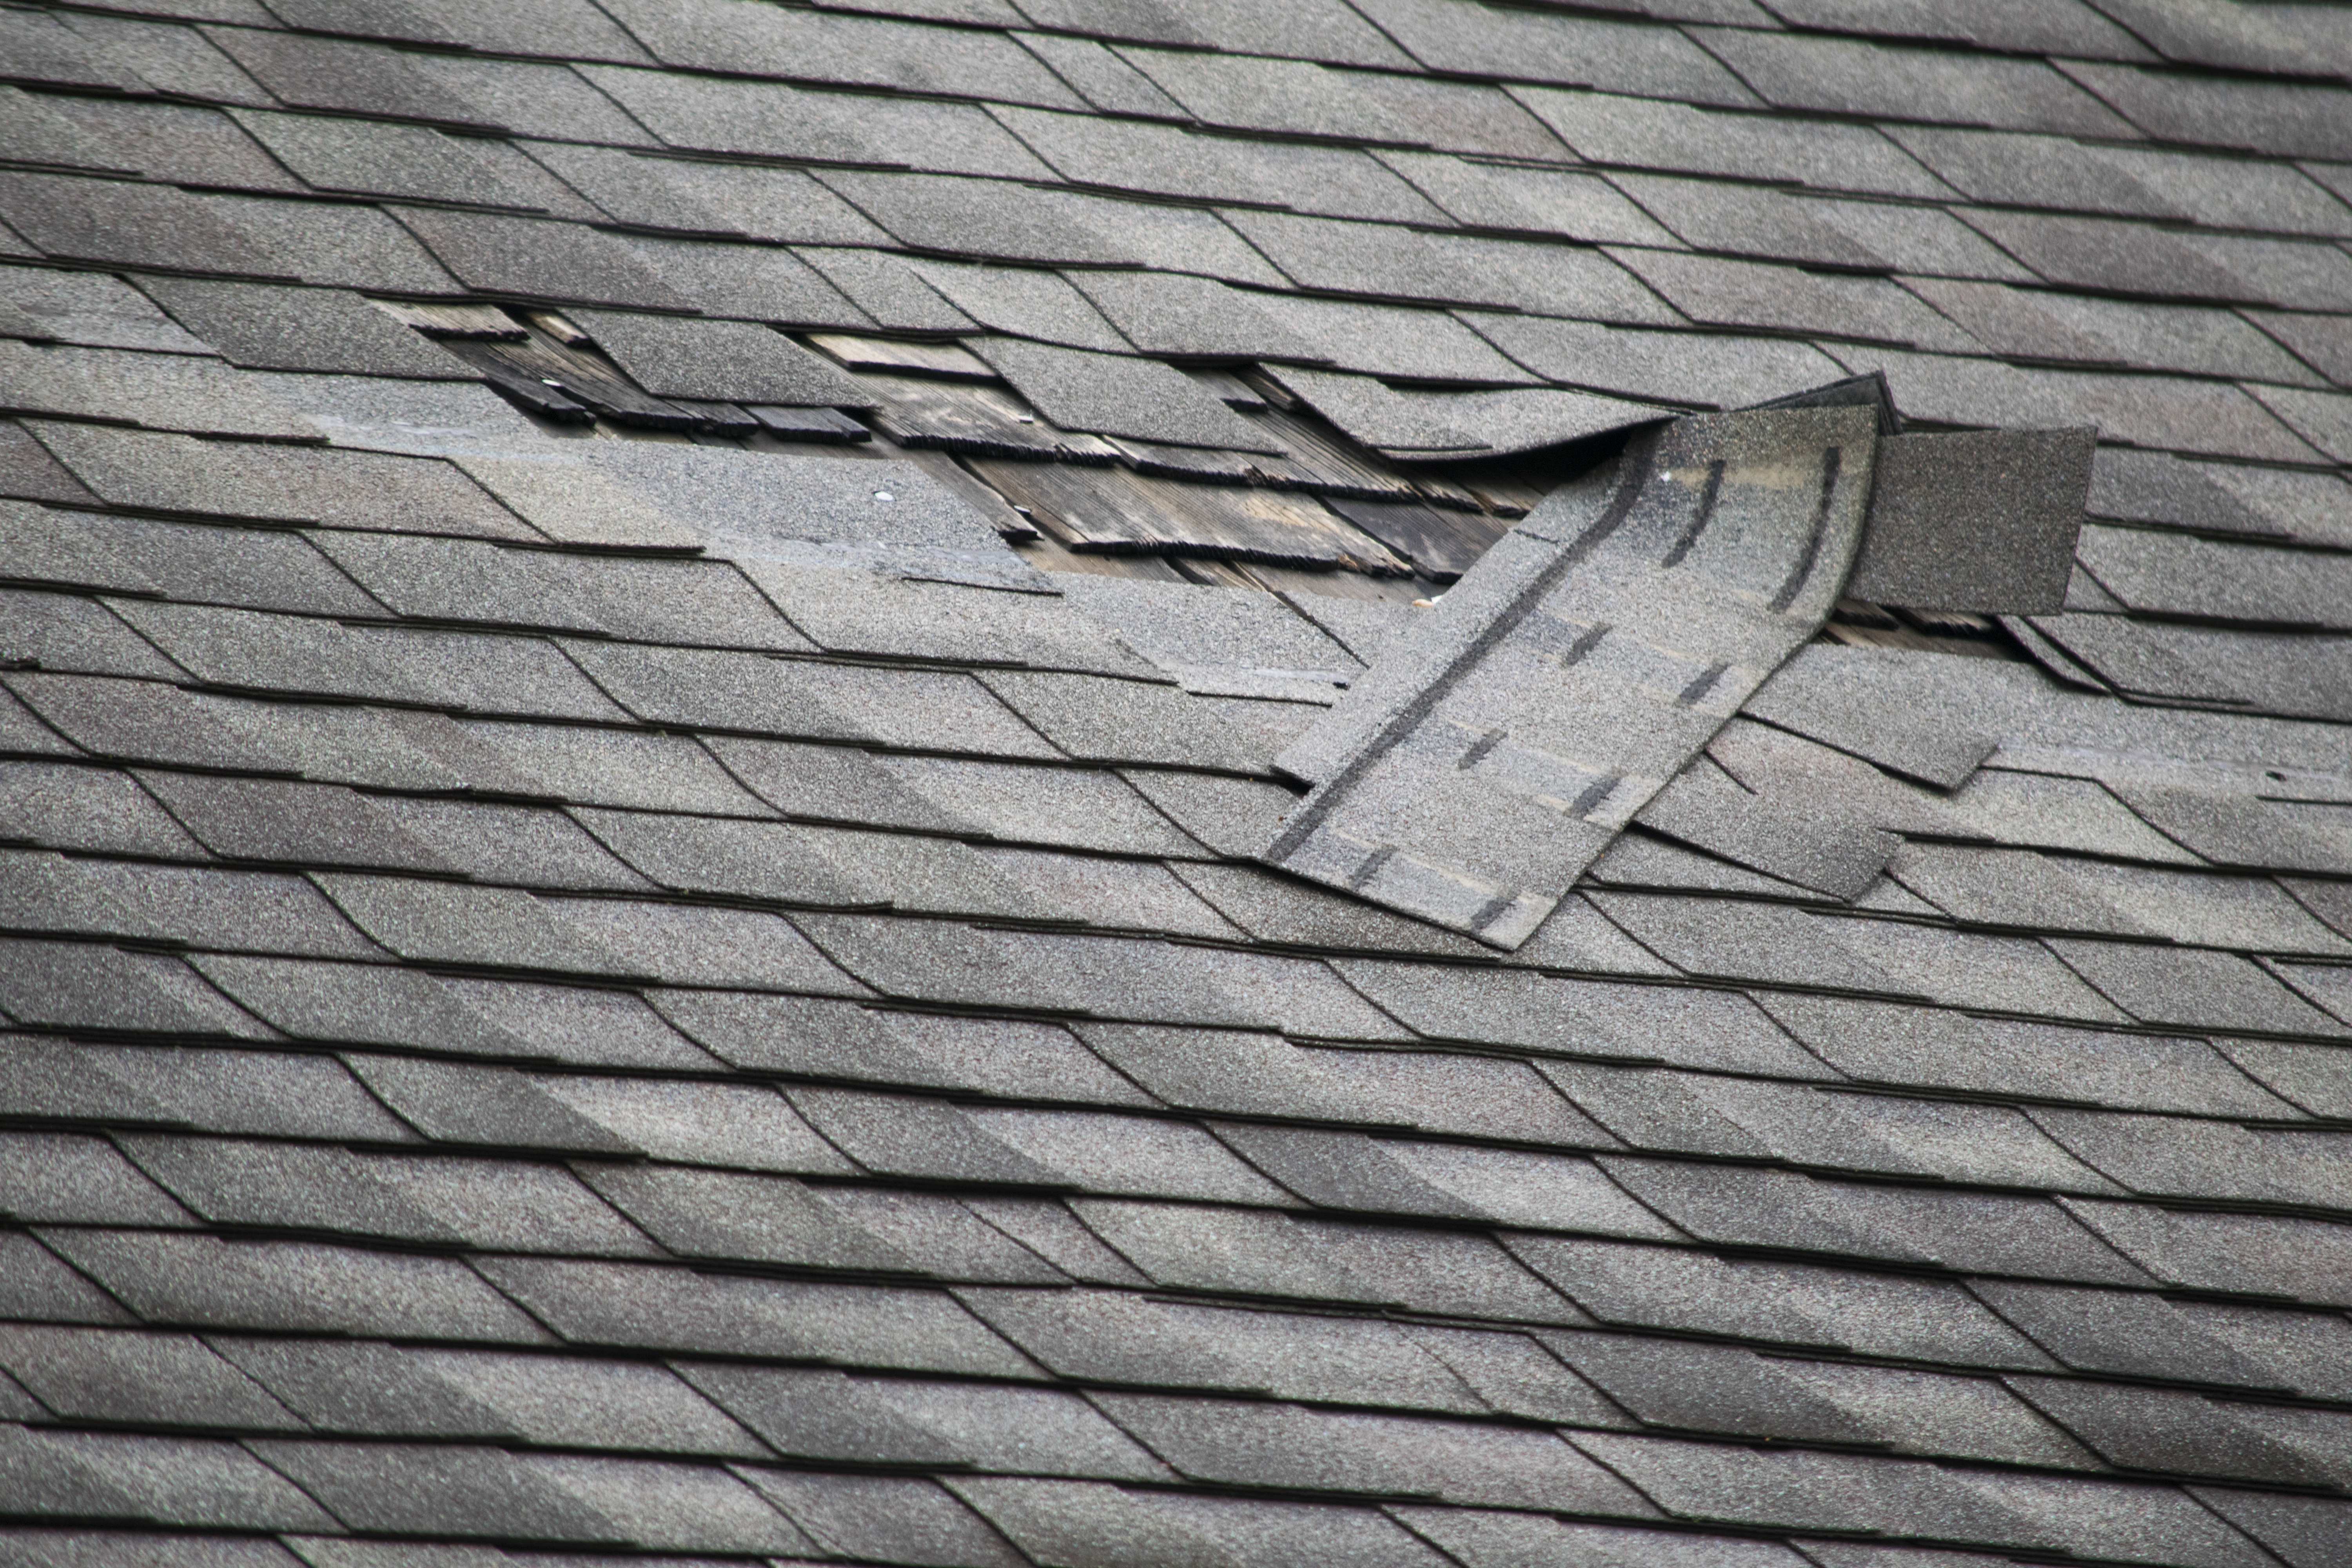 Savannah Georgia Roofing and Roof Repair from American Craftsman Renovations 912-481-8353